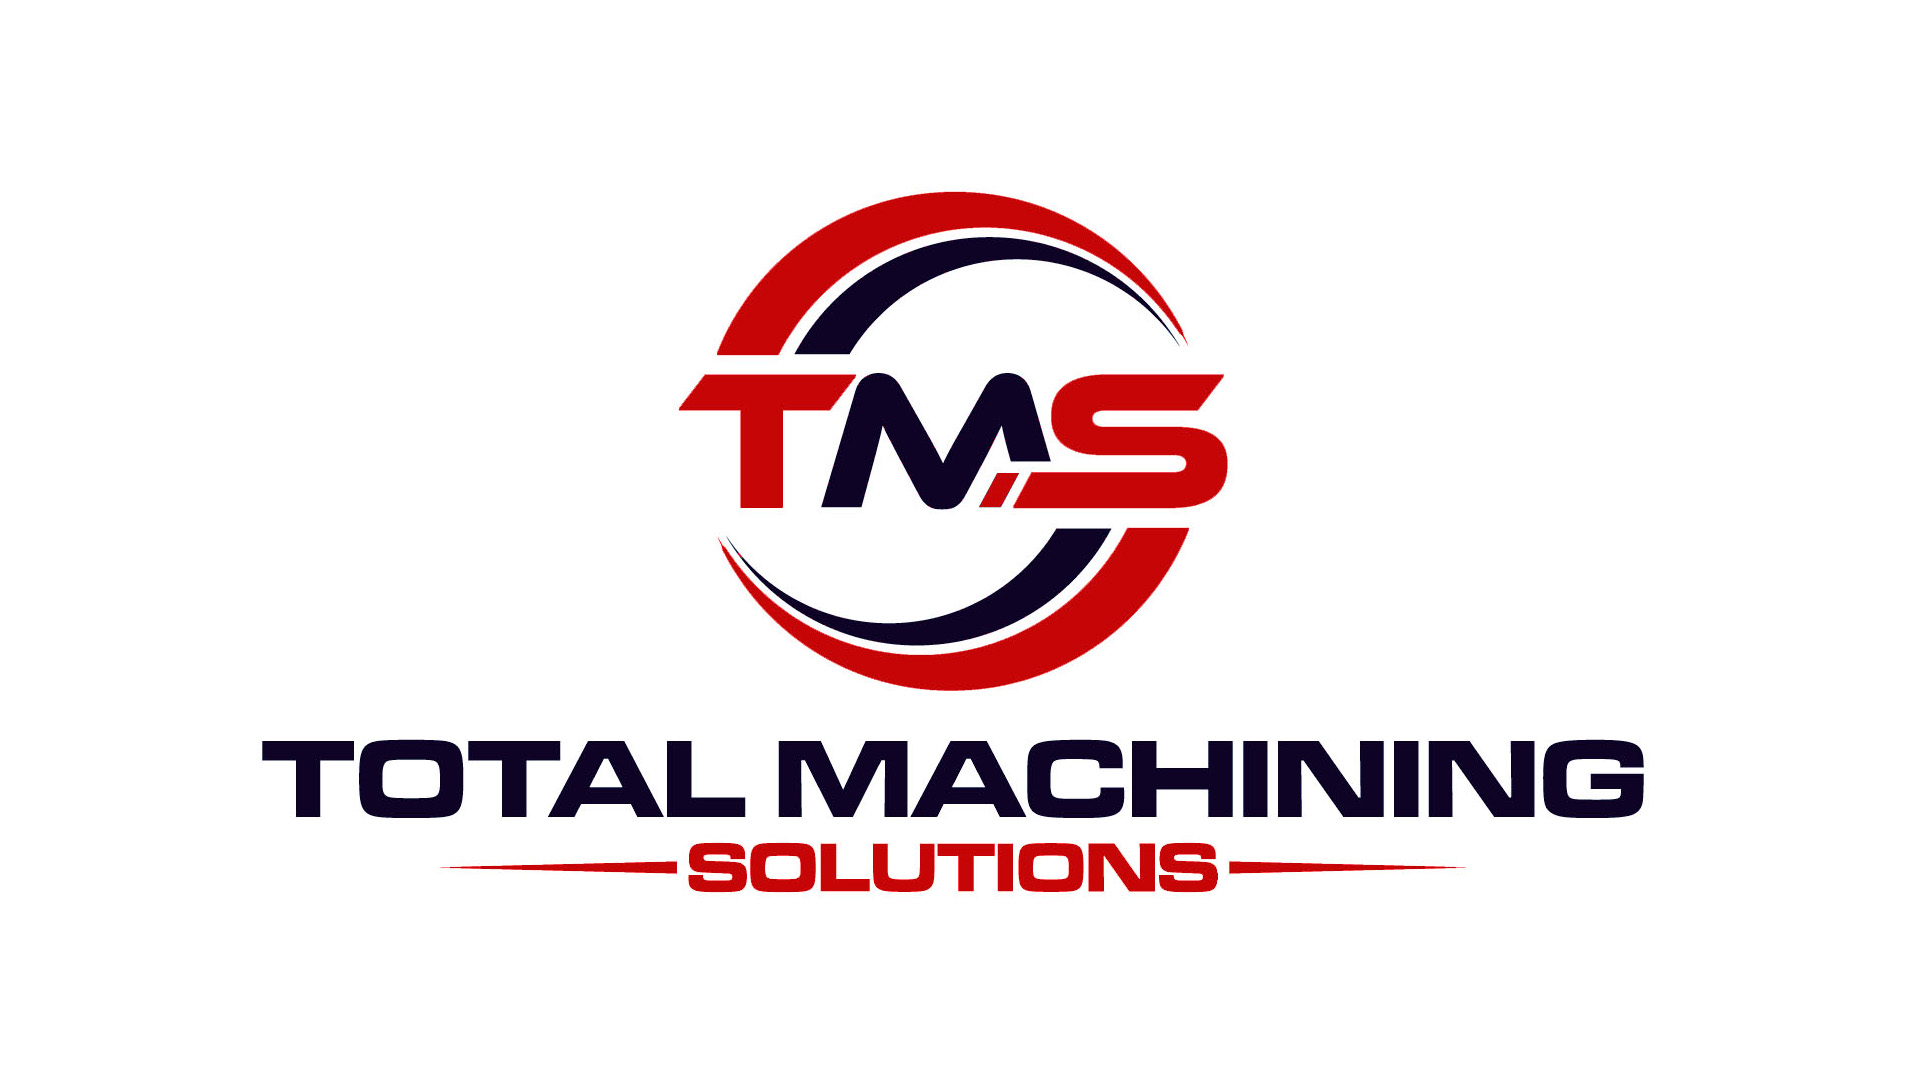 Total Machining Solutions Ltd